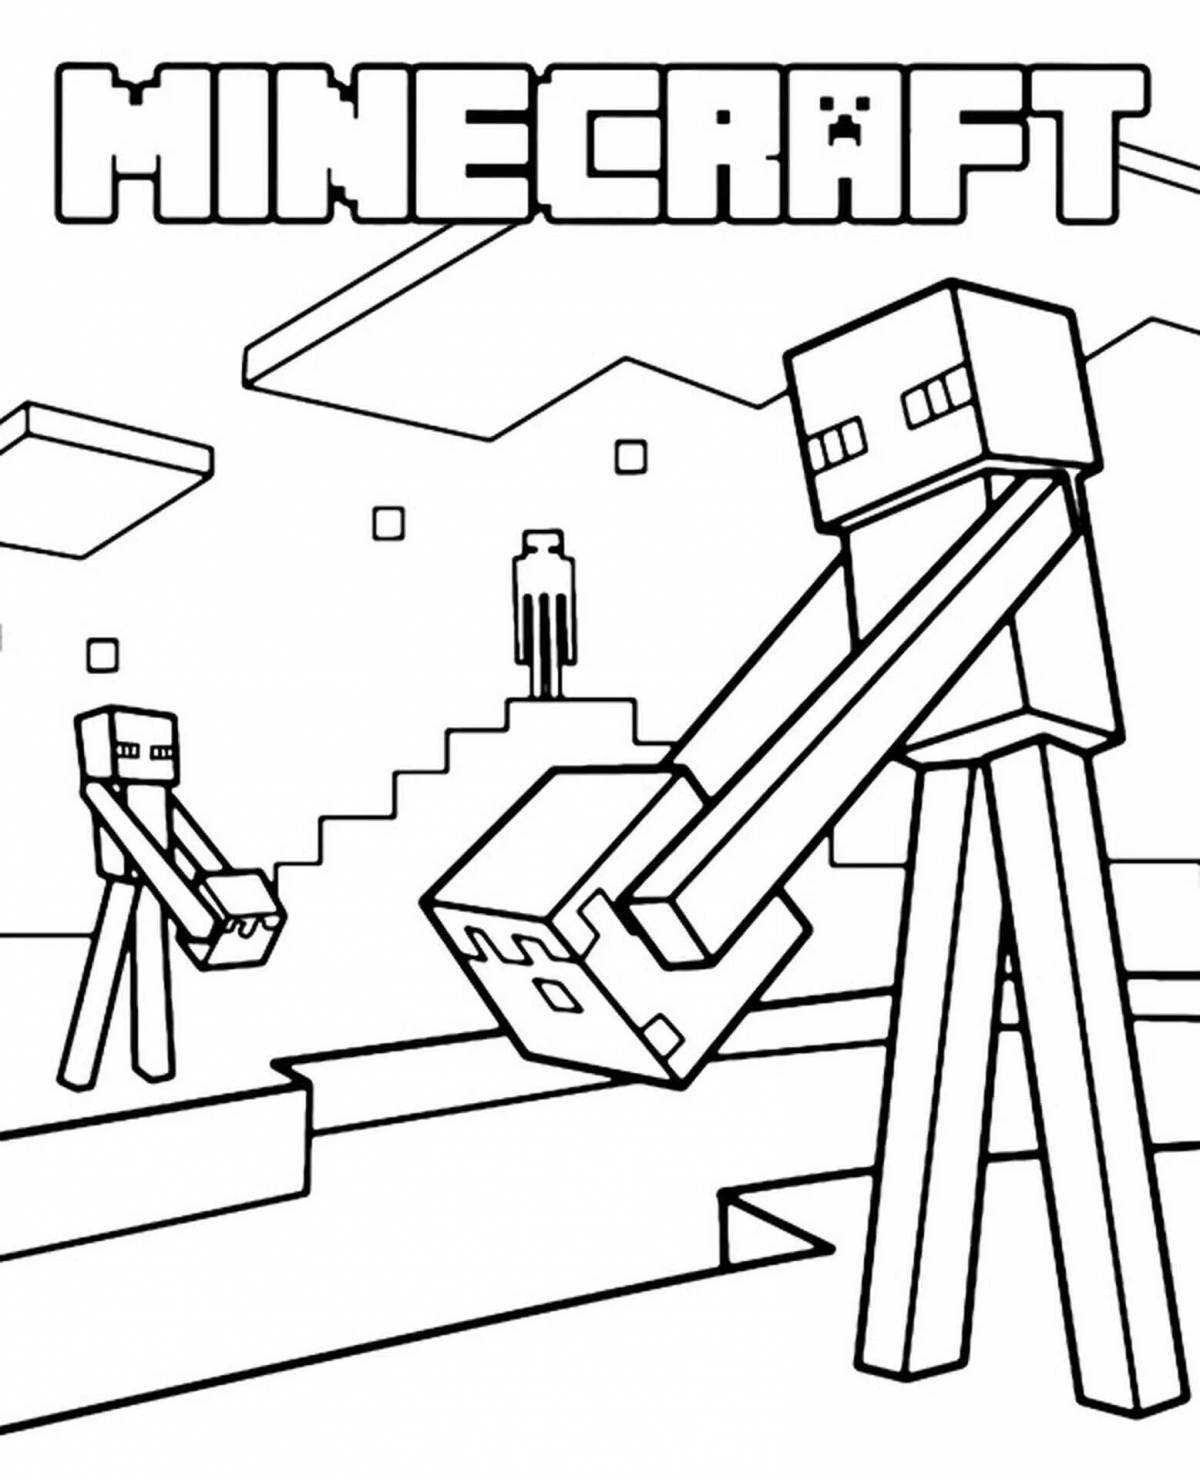 Bright minecraft icon coloring page